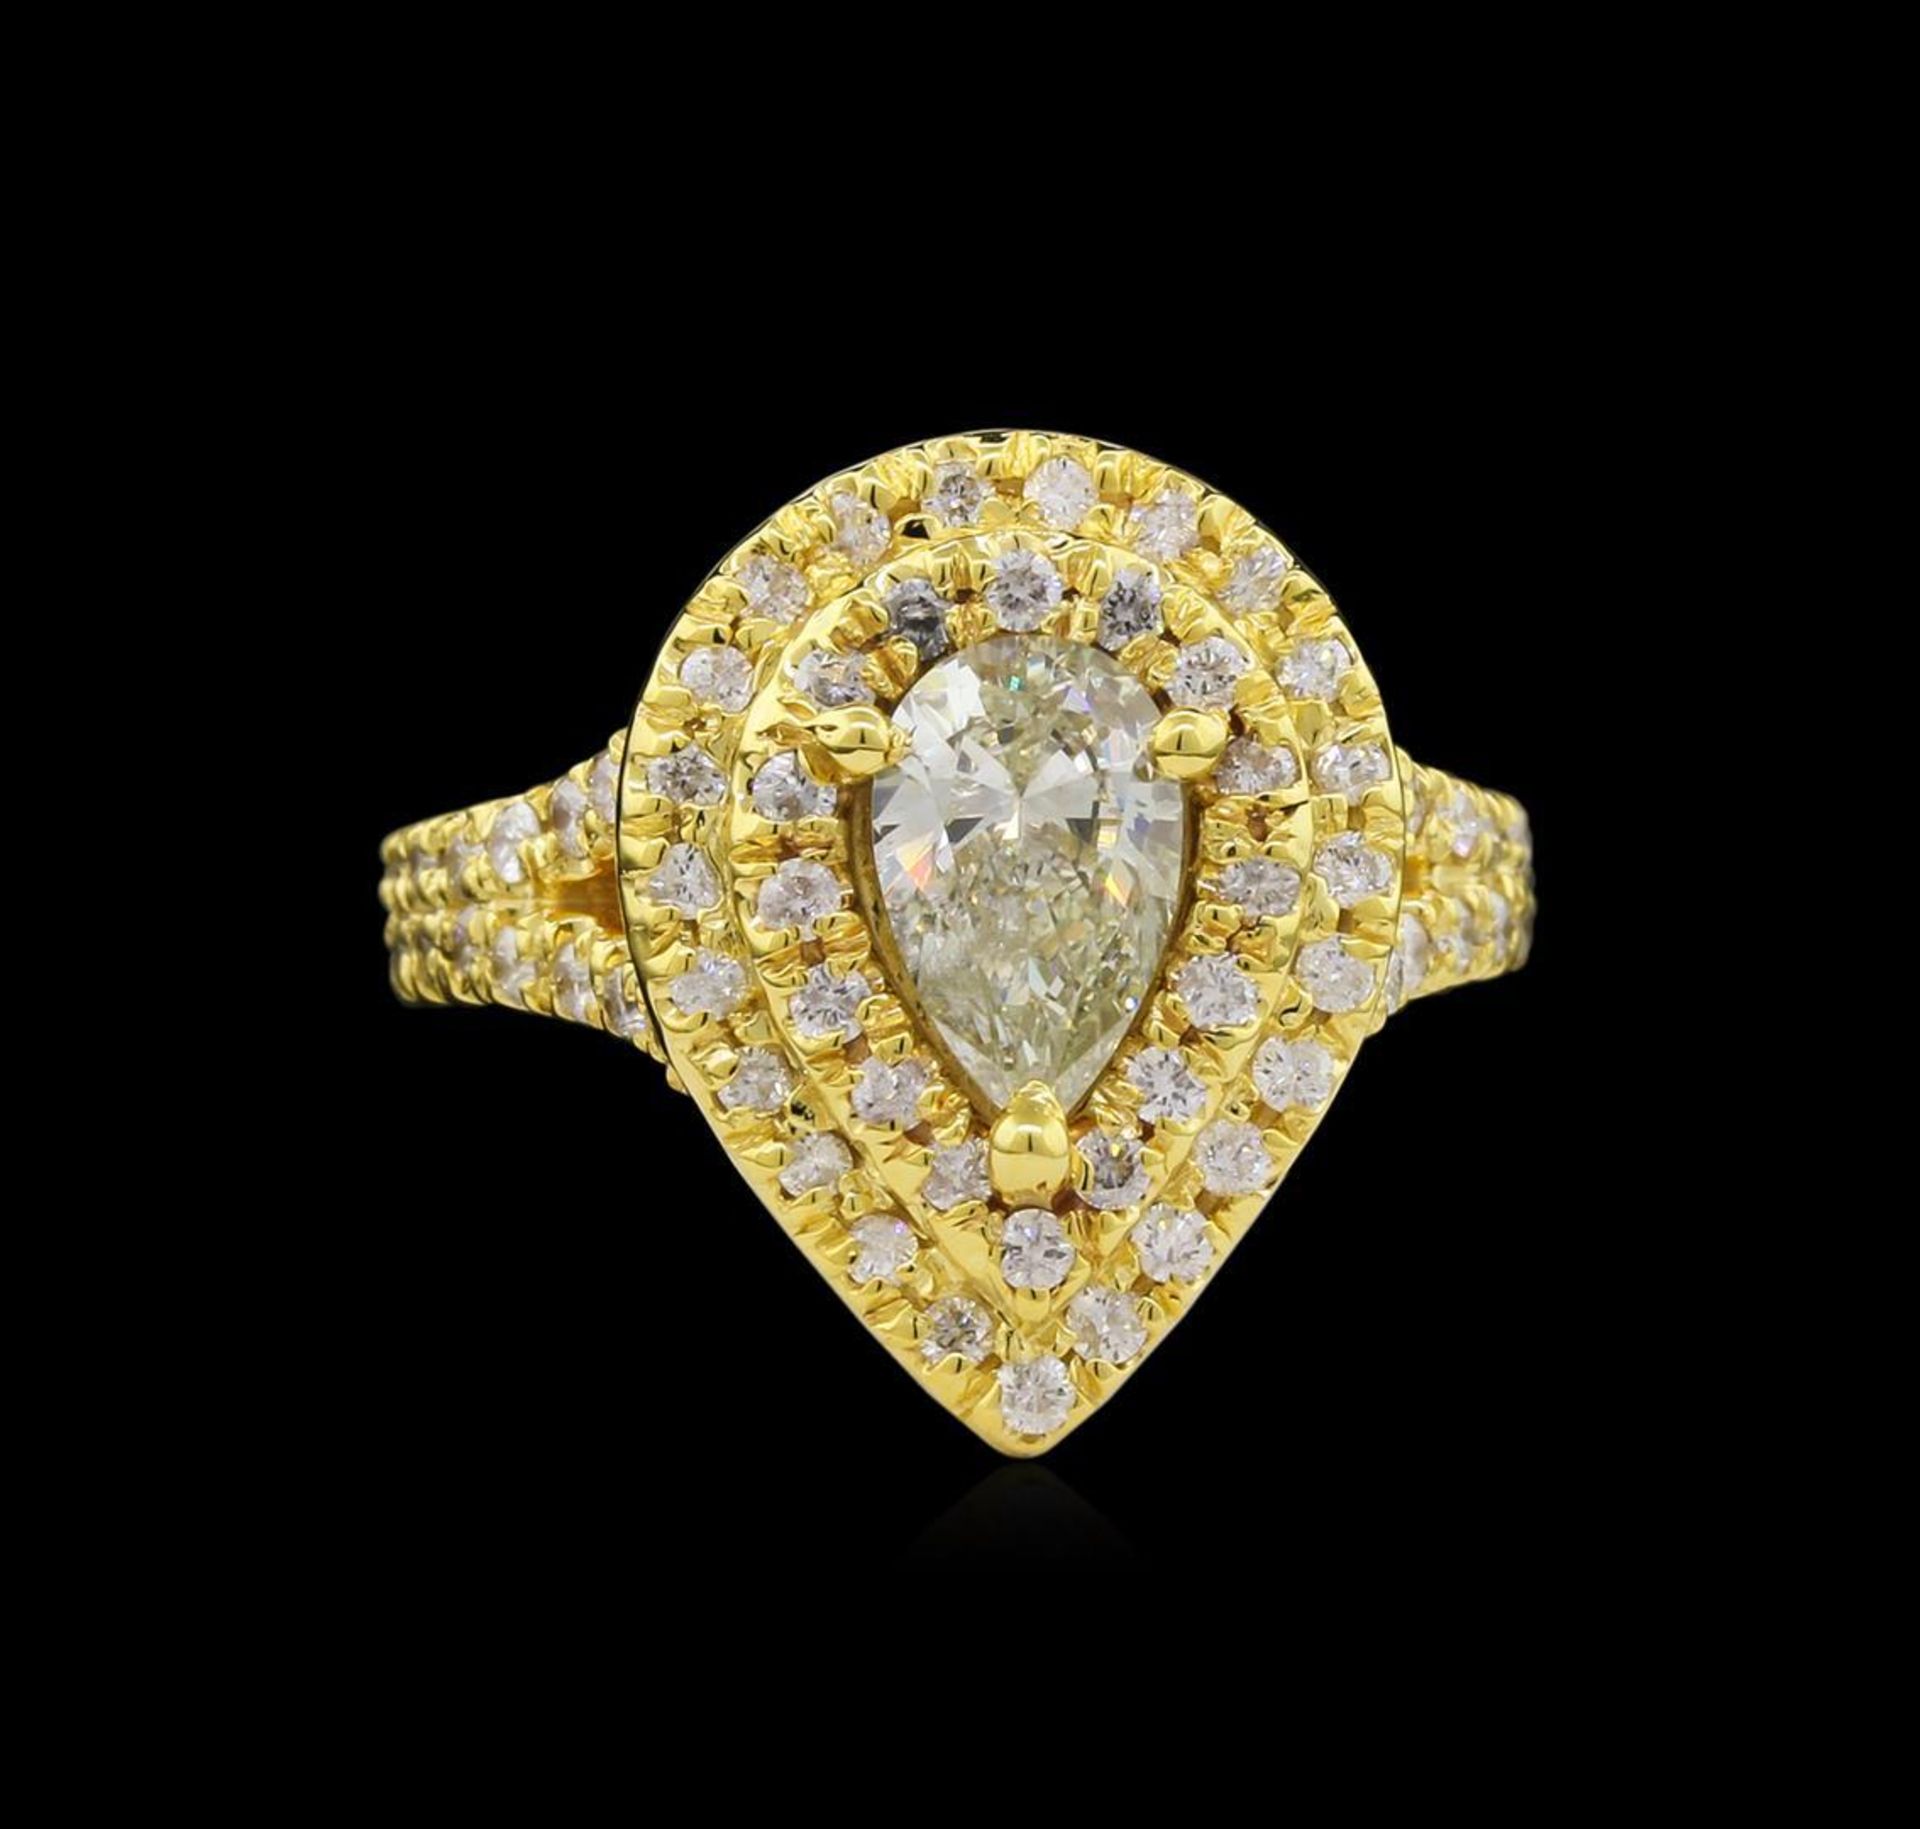 2.09 ctw Diamond Ring - 14KT Yellow Gold - Image 2 of 3